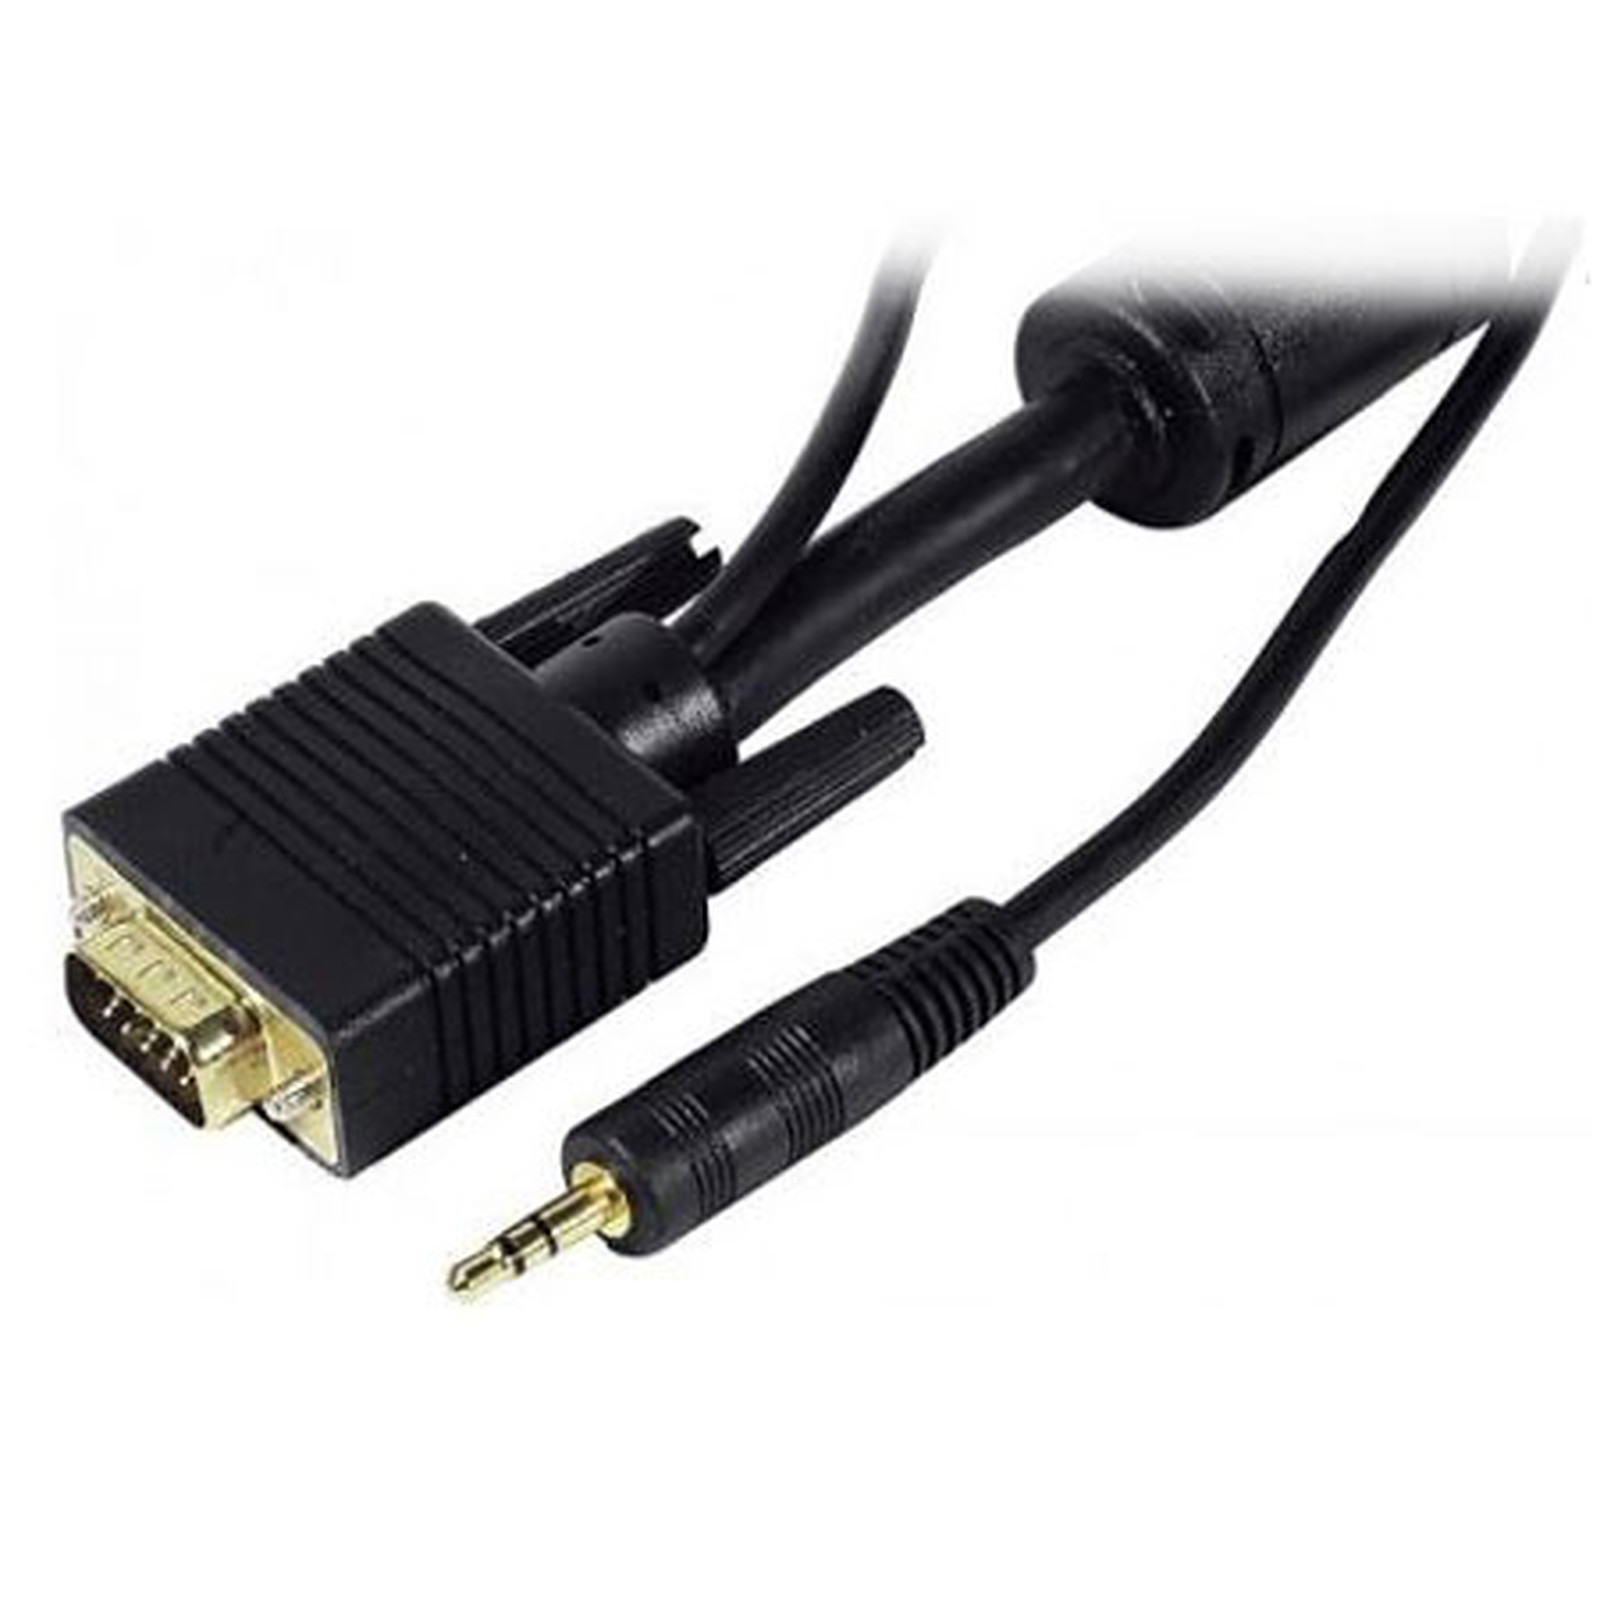 Cable VGA + Jack male / male (1.8 mètre) - VGA Generique